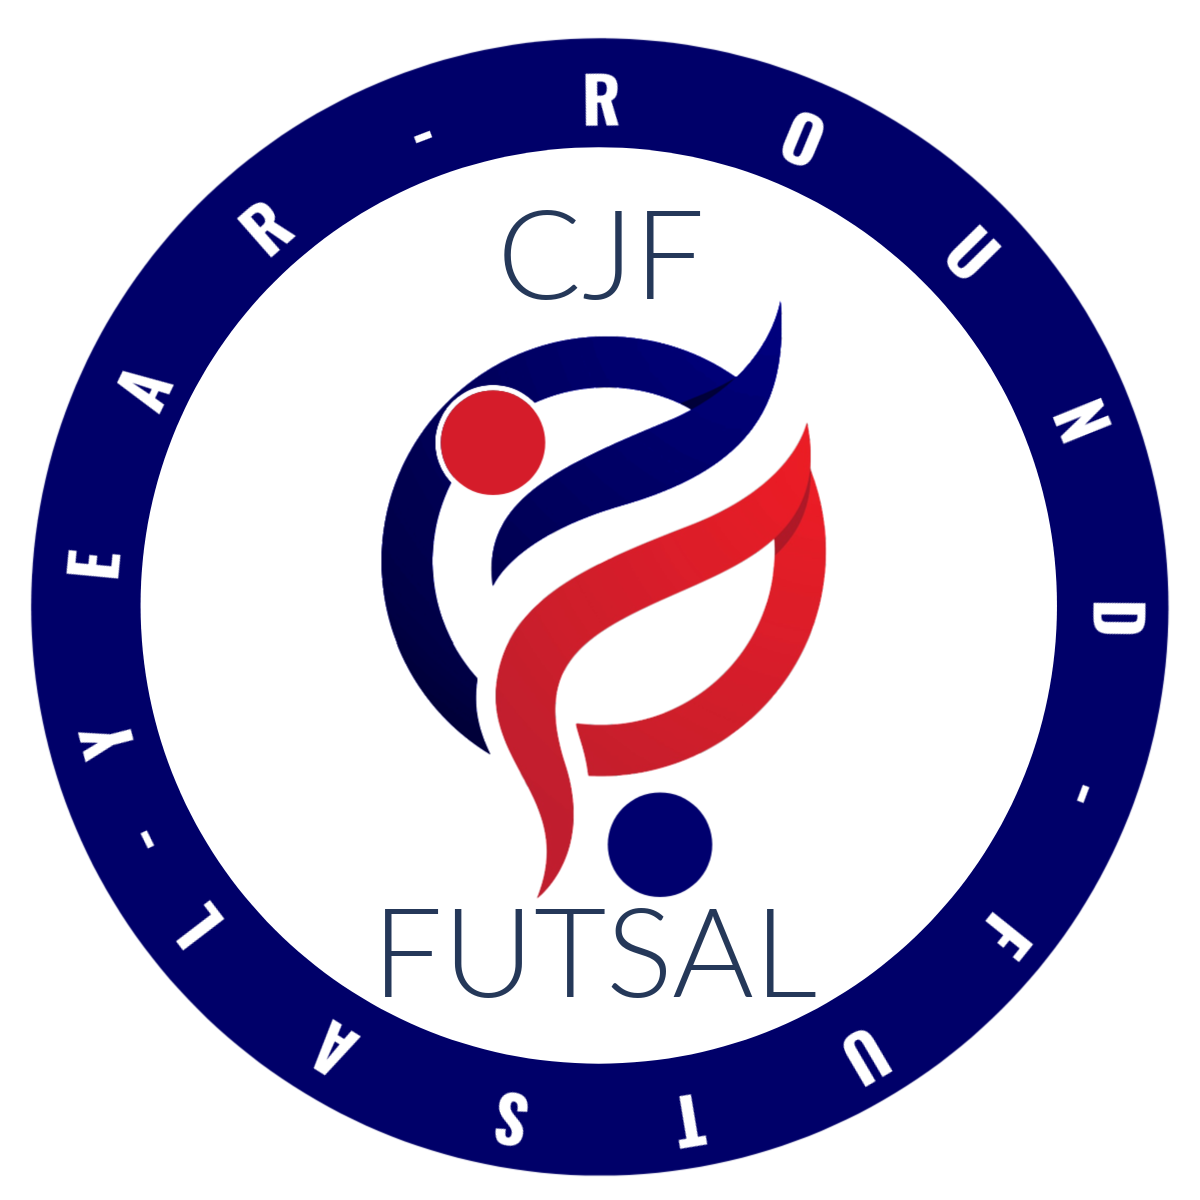 CJF Futsal Capelli Sports Complex | Winter League Play